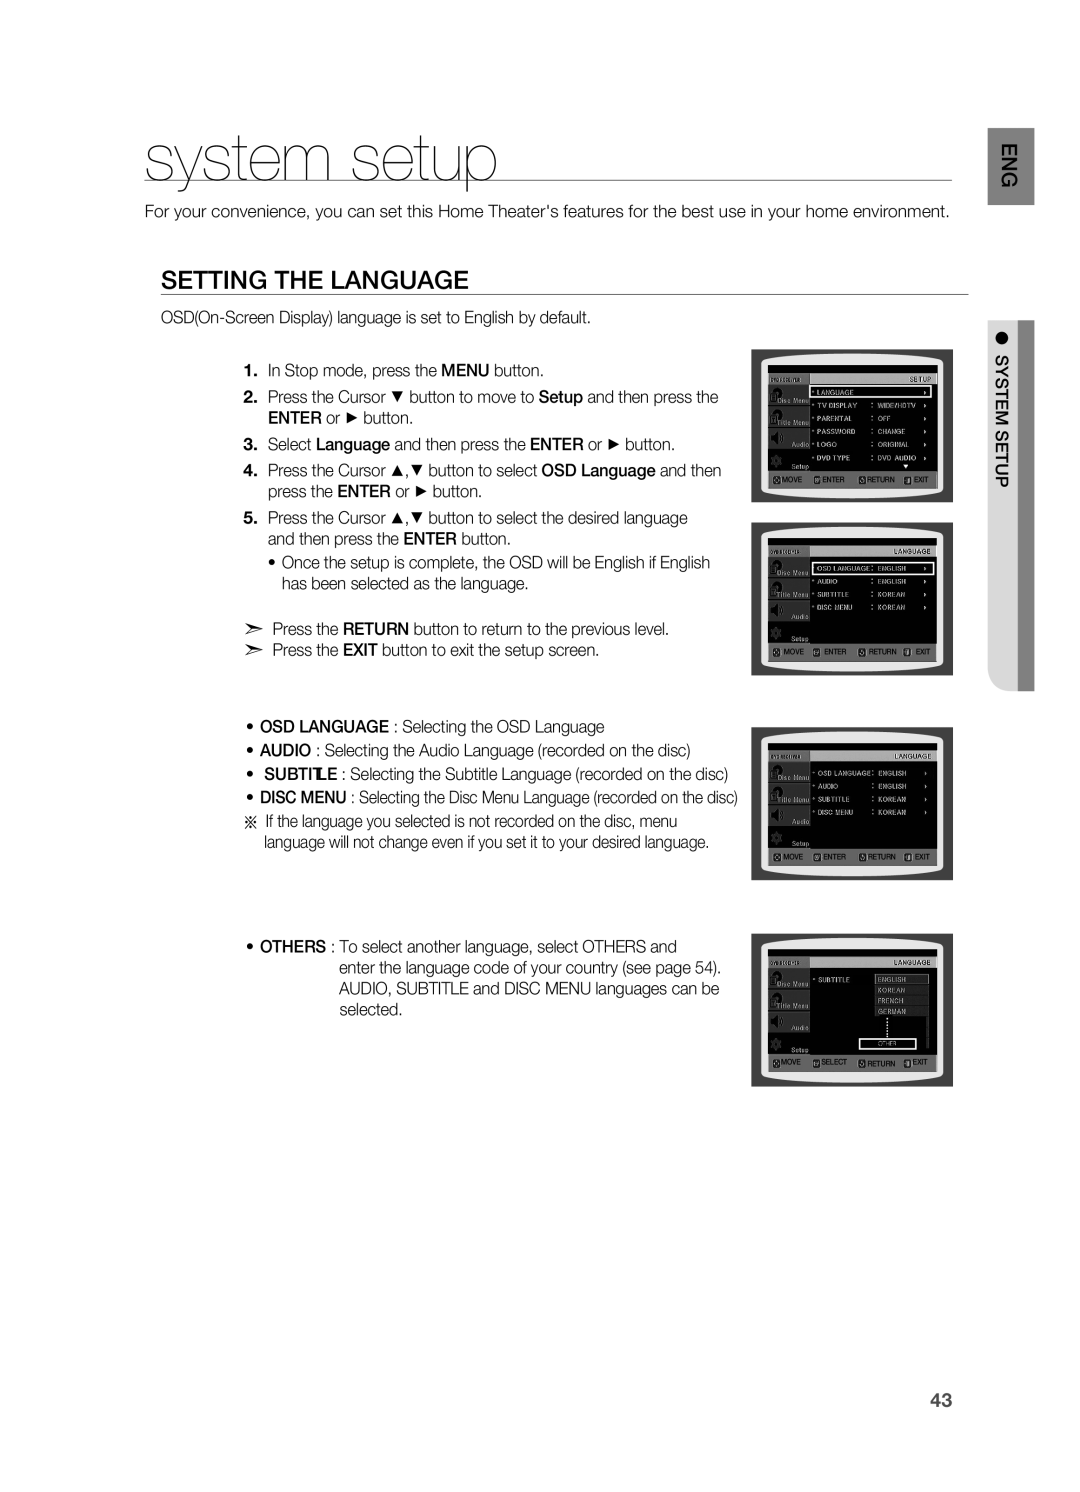 Samsung HT-X810 user manual system setup, Setting the Language 